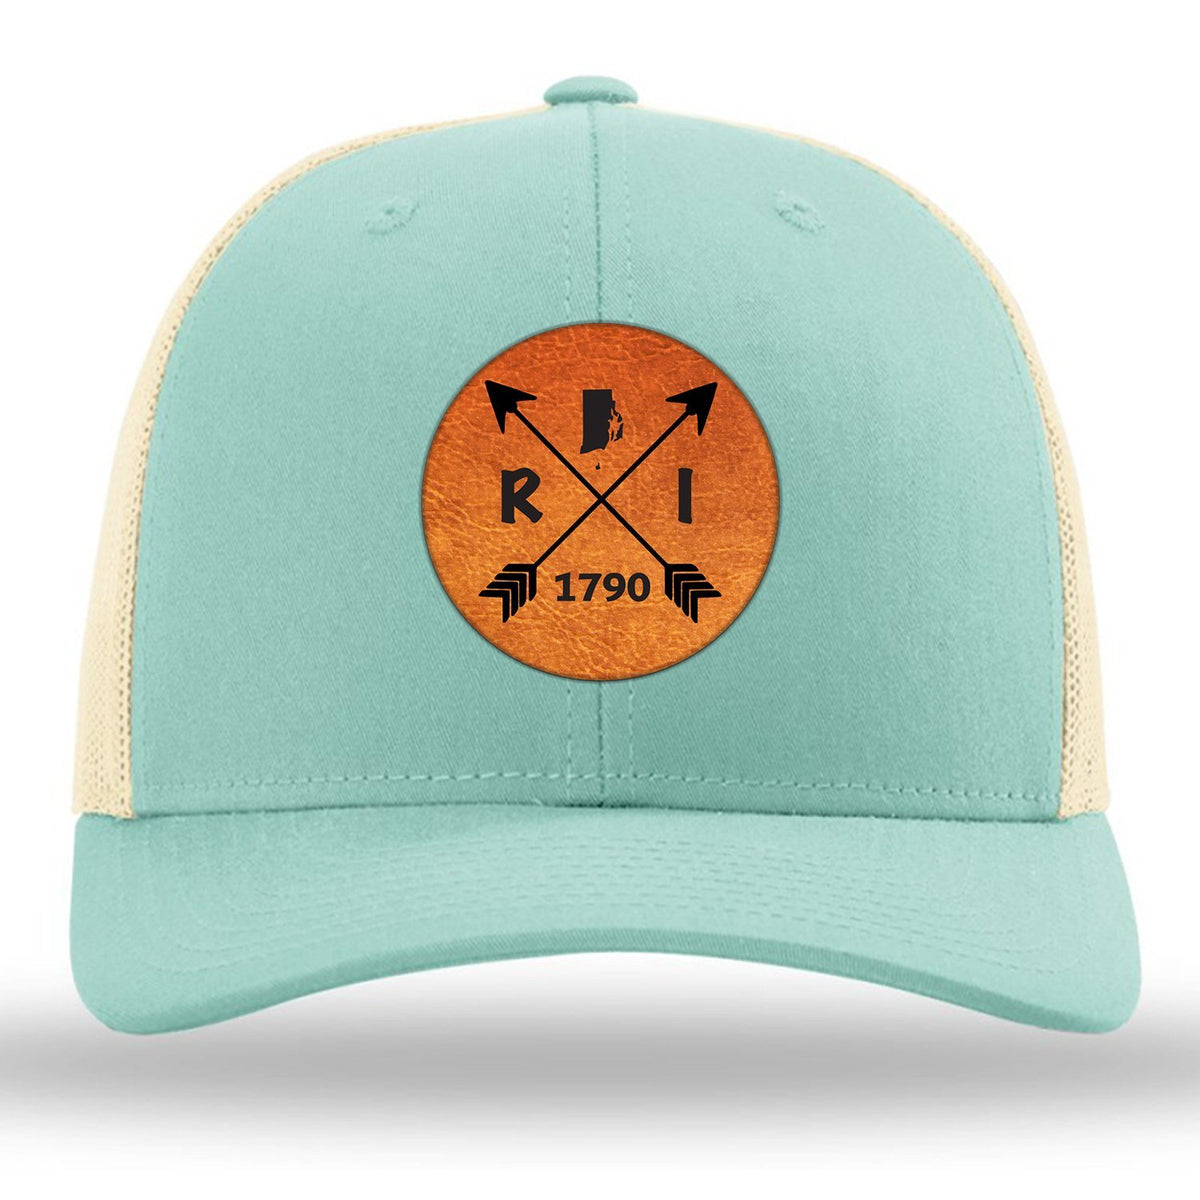 Rhode Island State Arrows - Leather Patch Trucker Hat